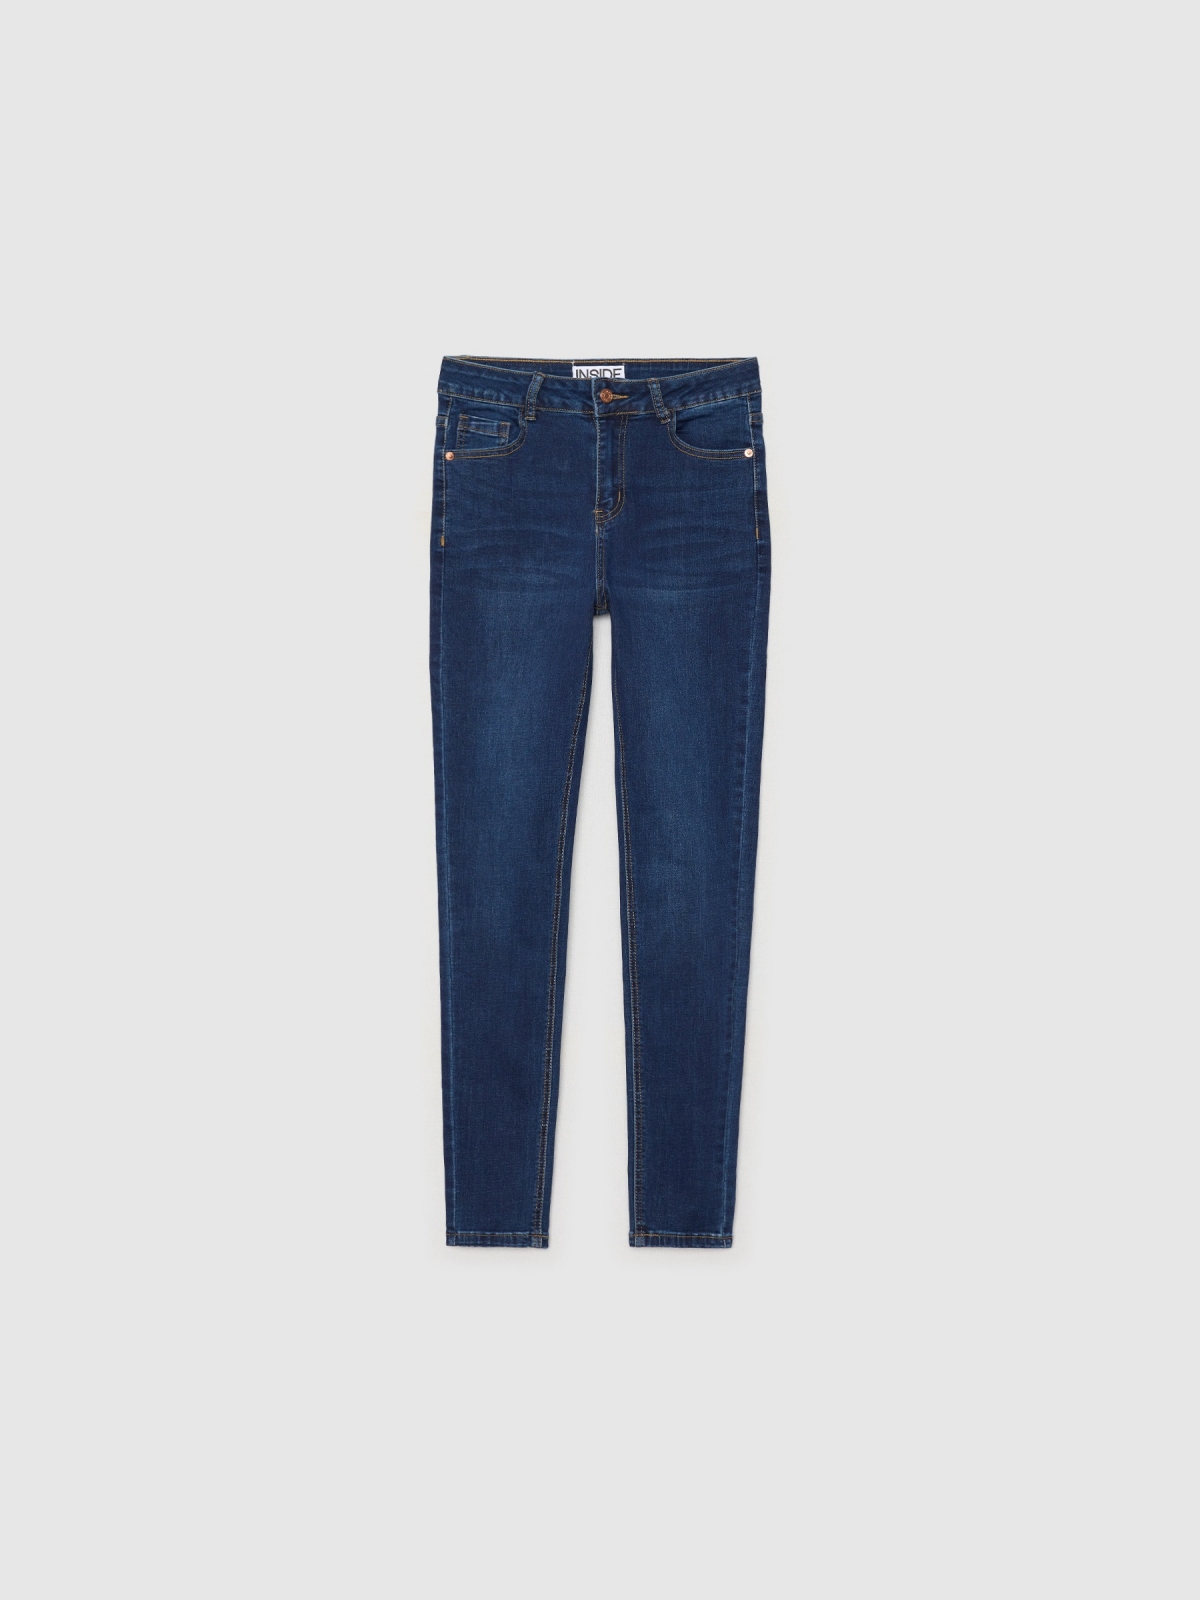  Jeans básicas de cintura média azul escuro